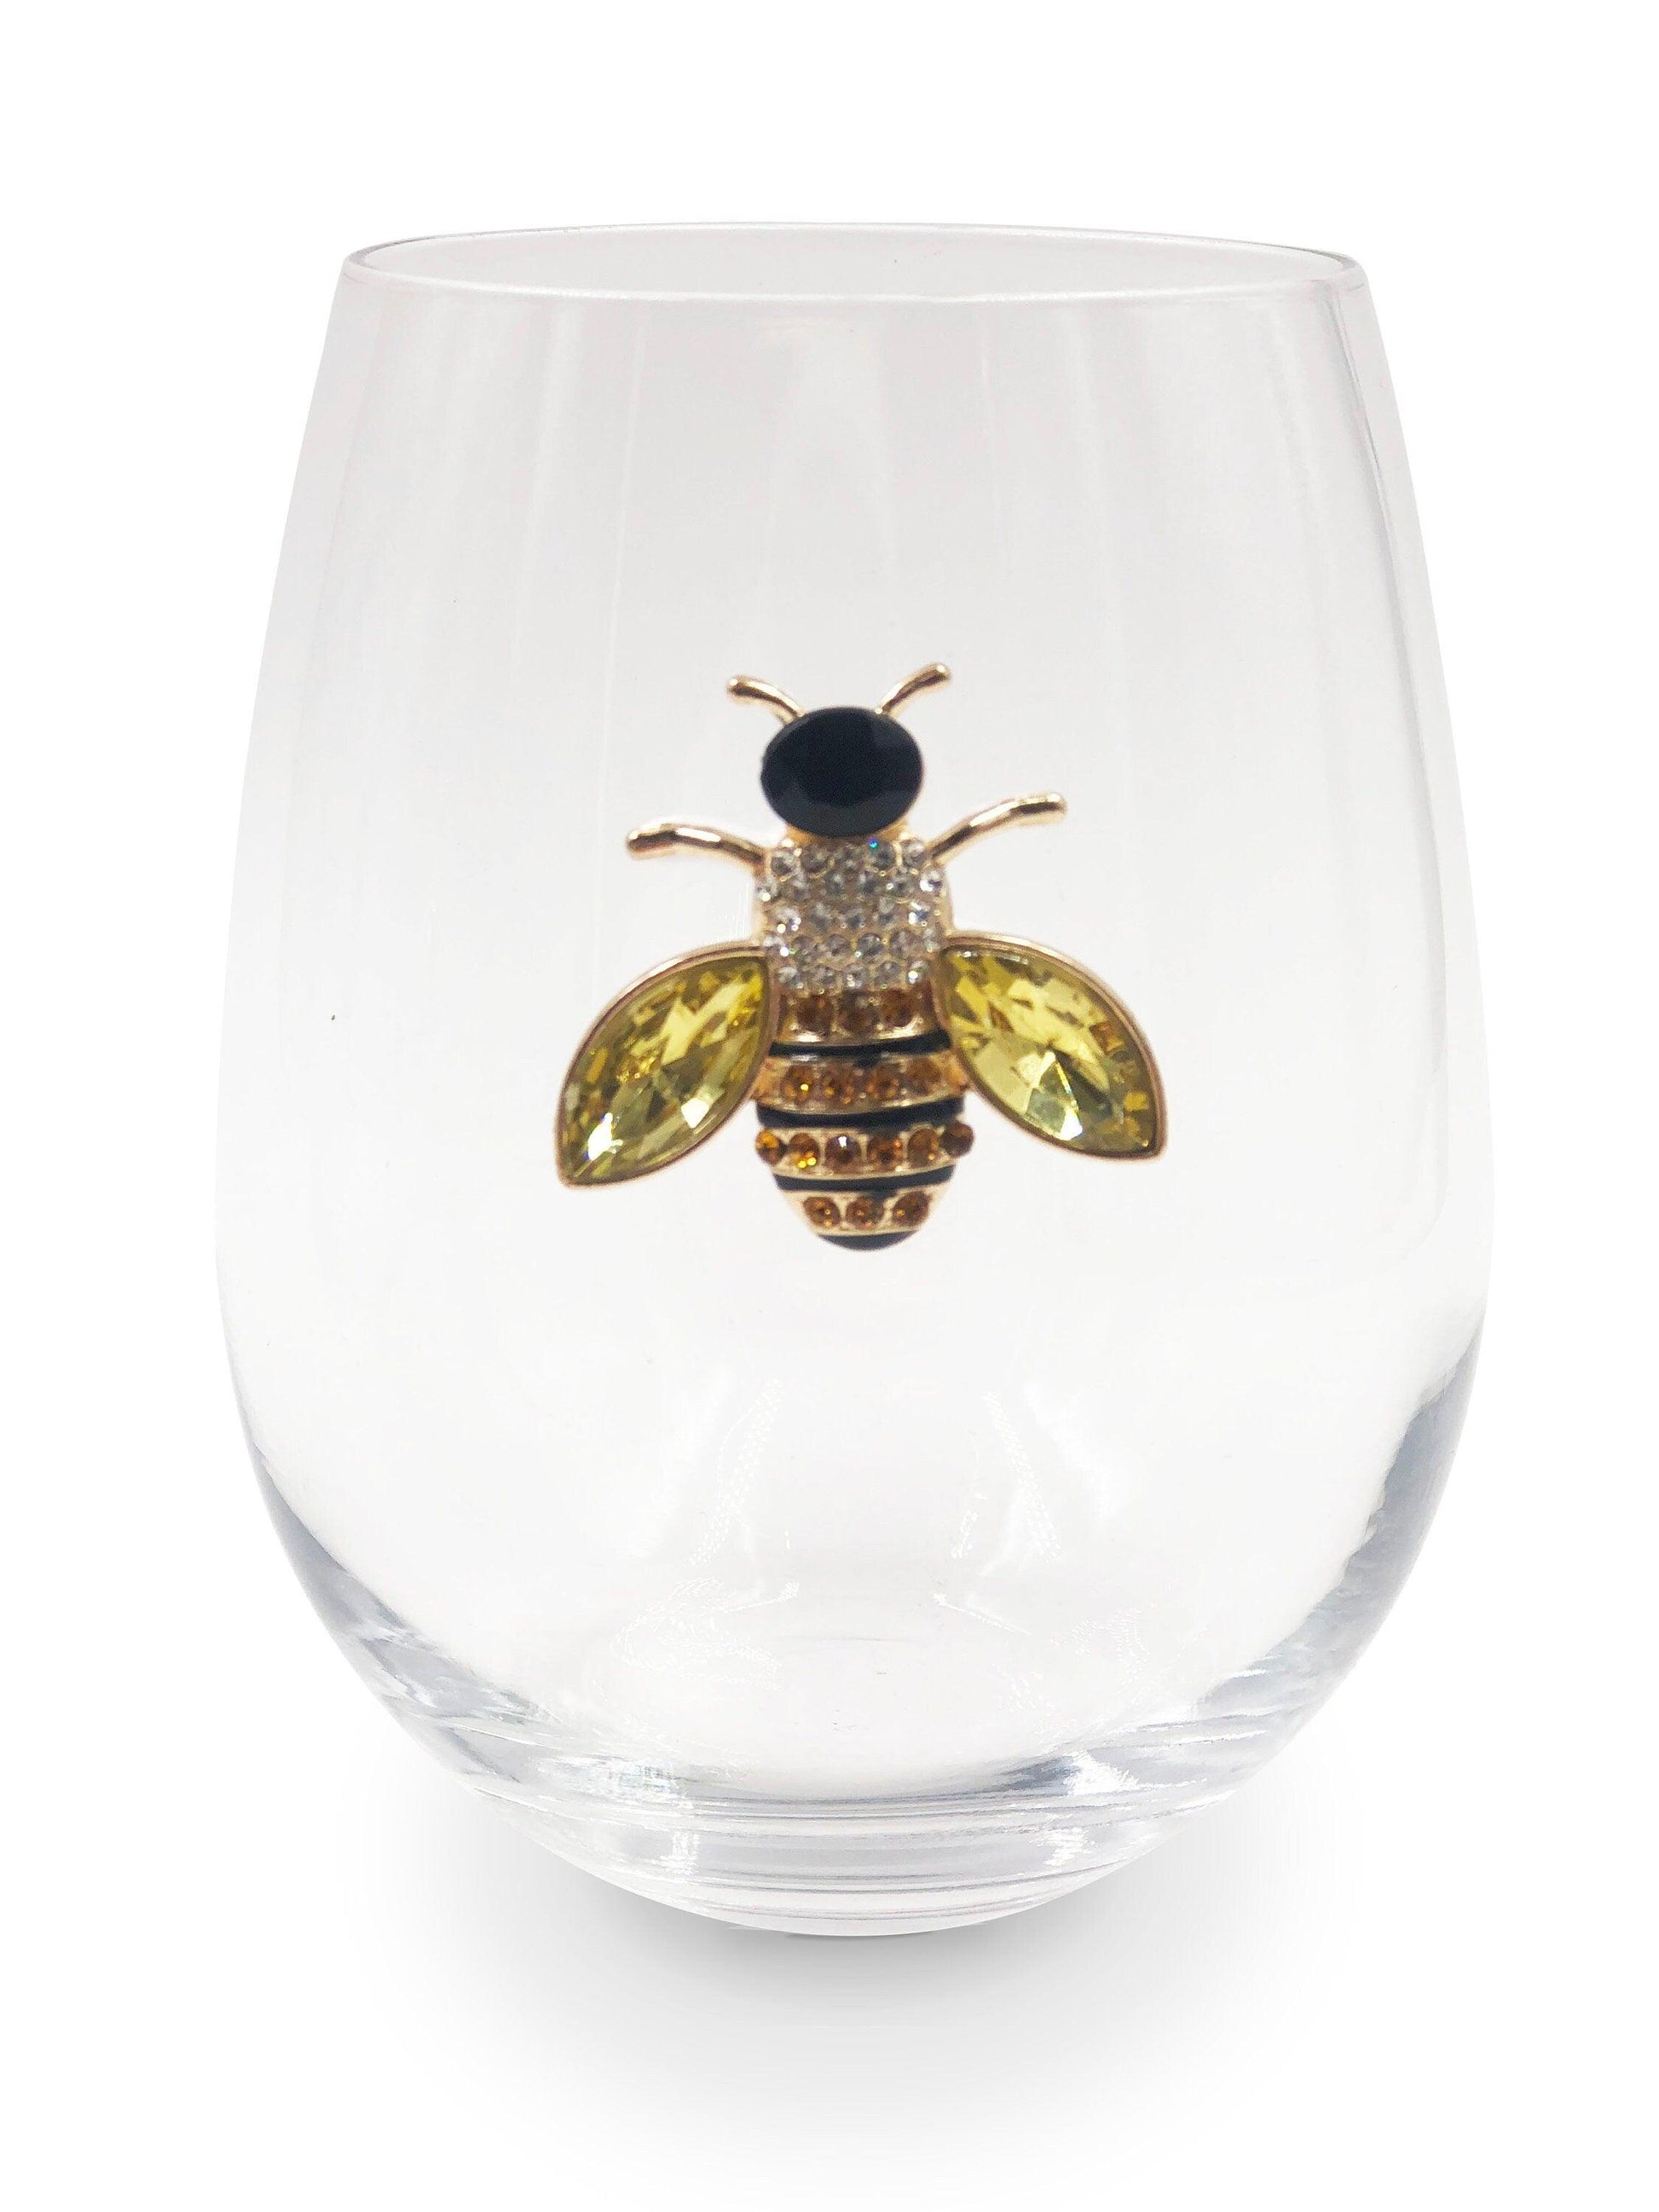 bee stemless wine glasses, bee glasses, bee wine glasses, bee glass, bee wine glass, bedazzled wine glasses